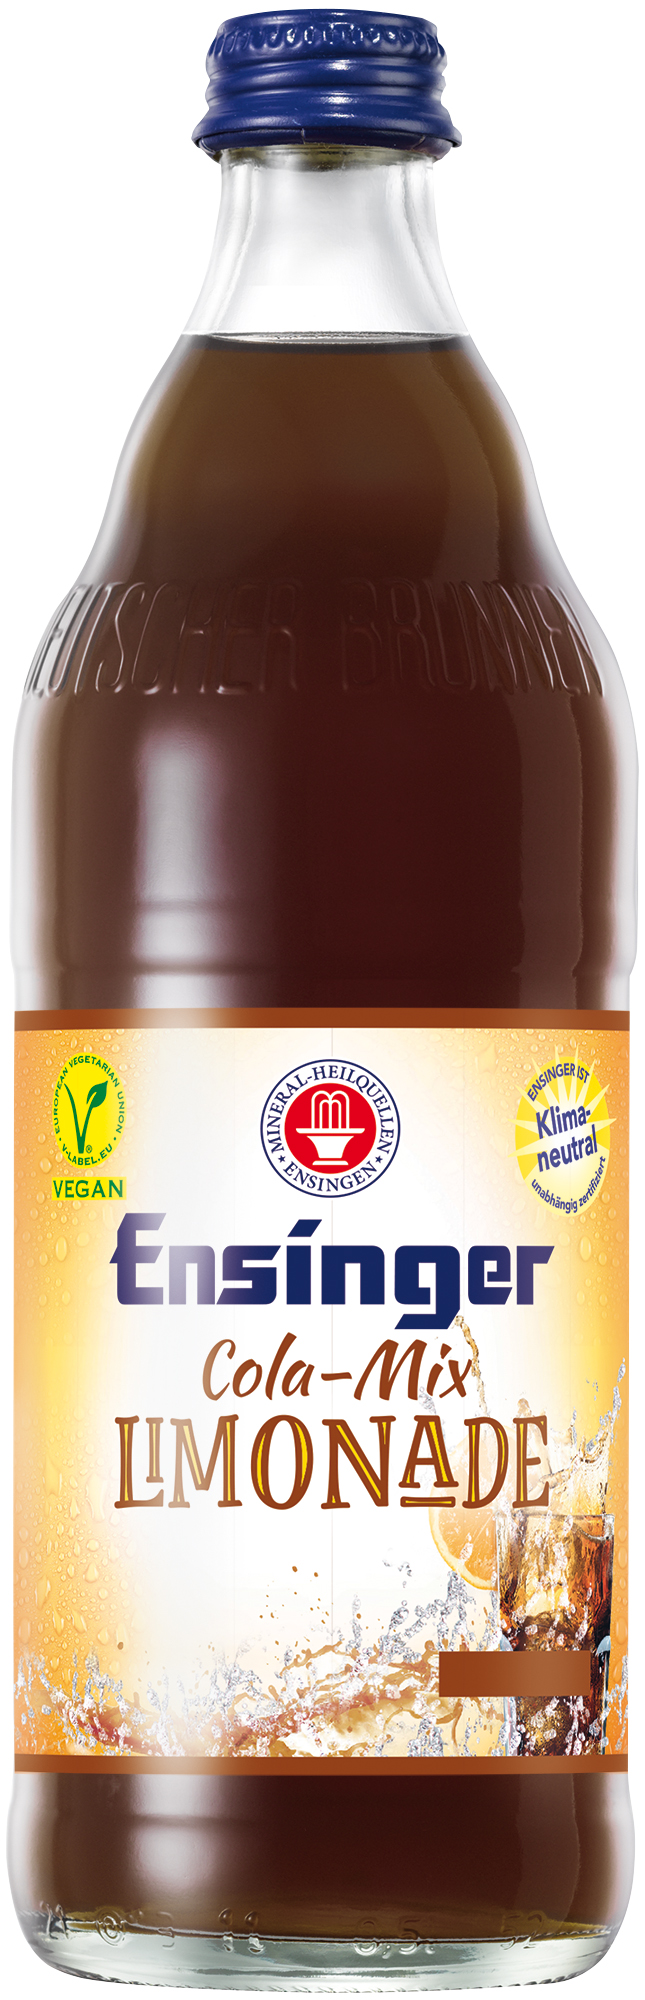 Ensinger Cola Mix Limonade